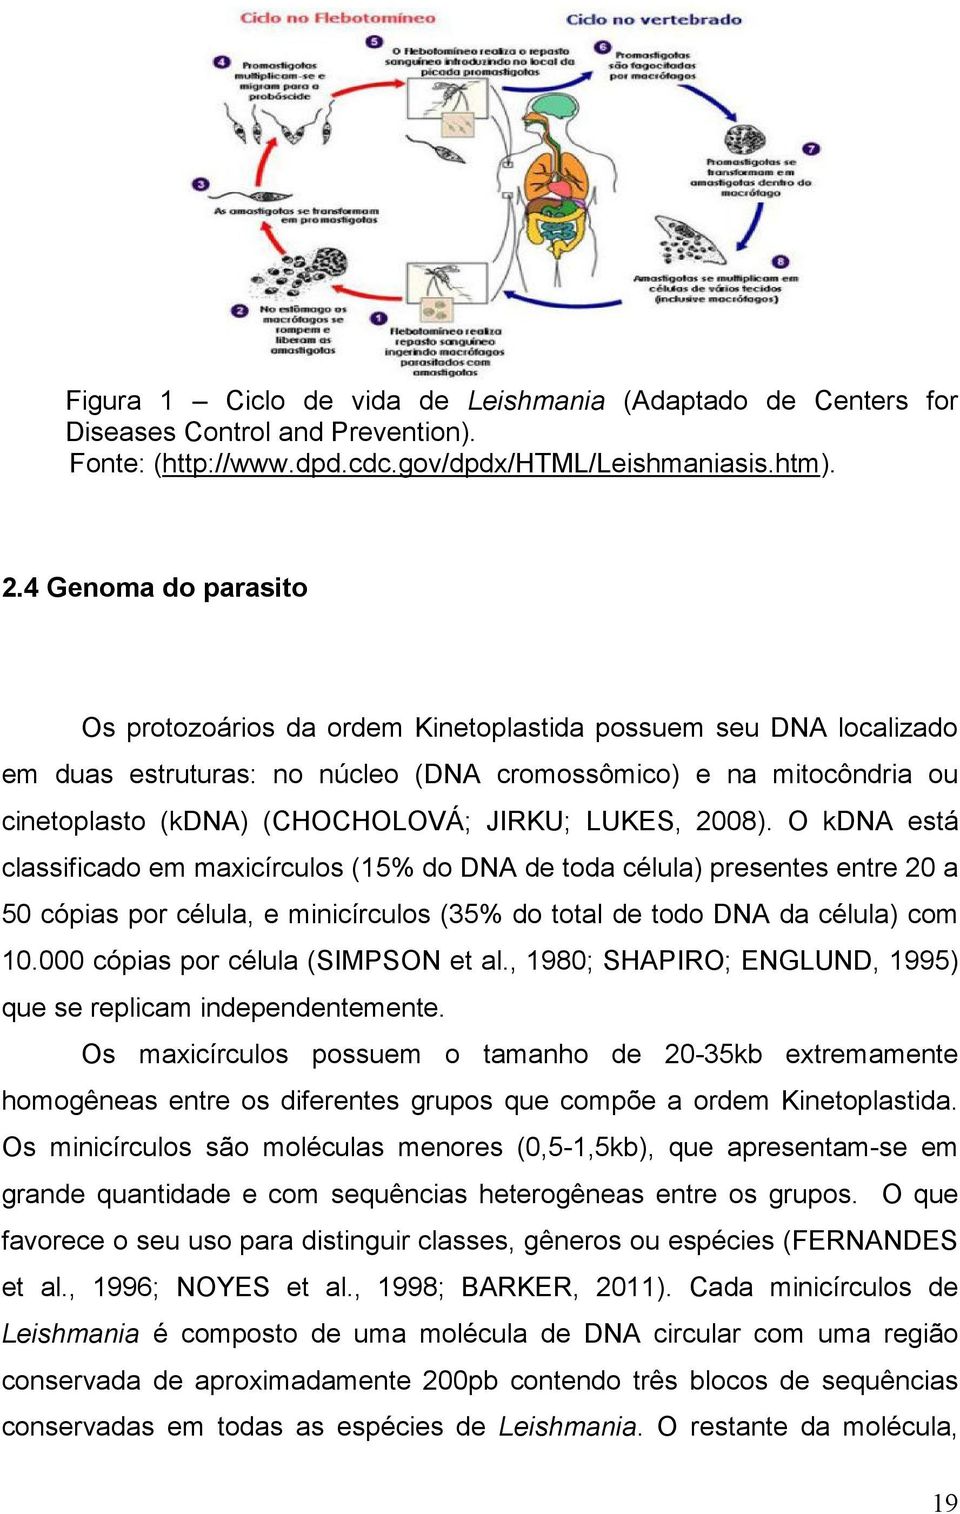 LUKES, 2008). O kdna está classificado em maxicírculos (15% do DNA de toda célula) presentes entre 20 a 50 cópias por célula, e minicírculos (35% do total de todo DNA da célula) com 10.